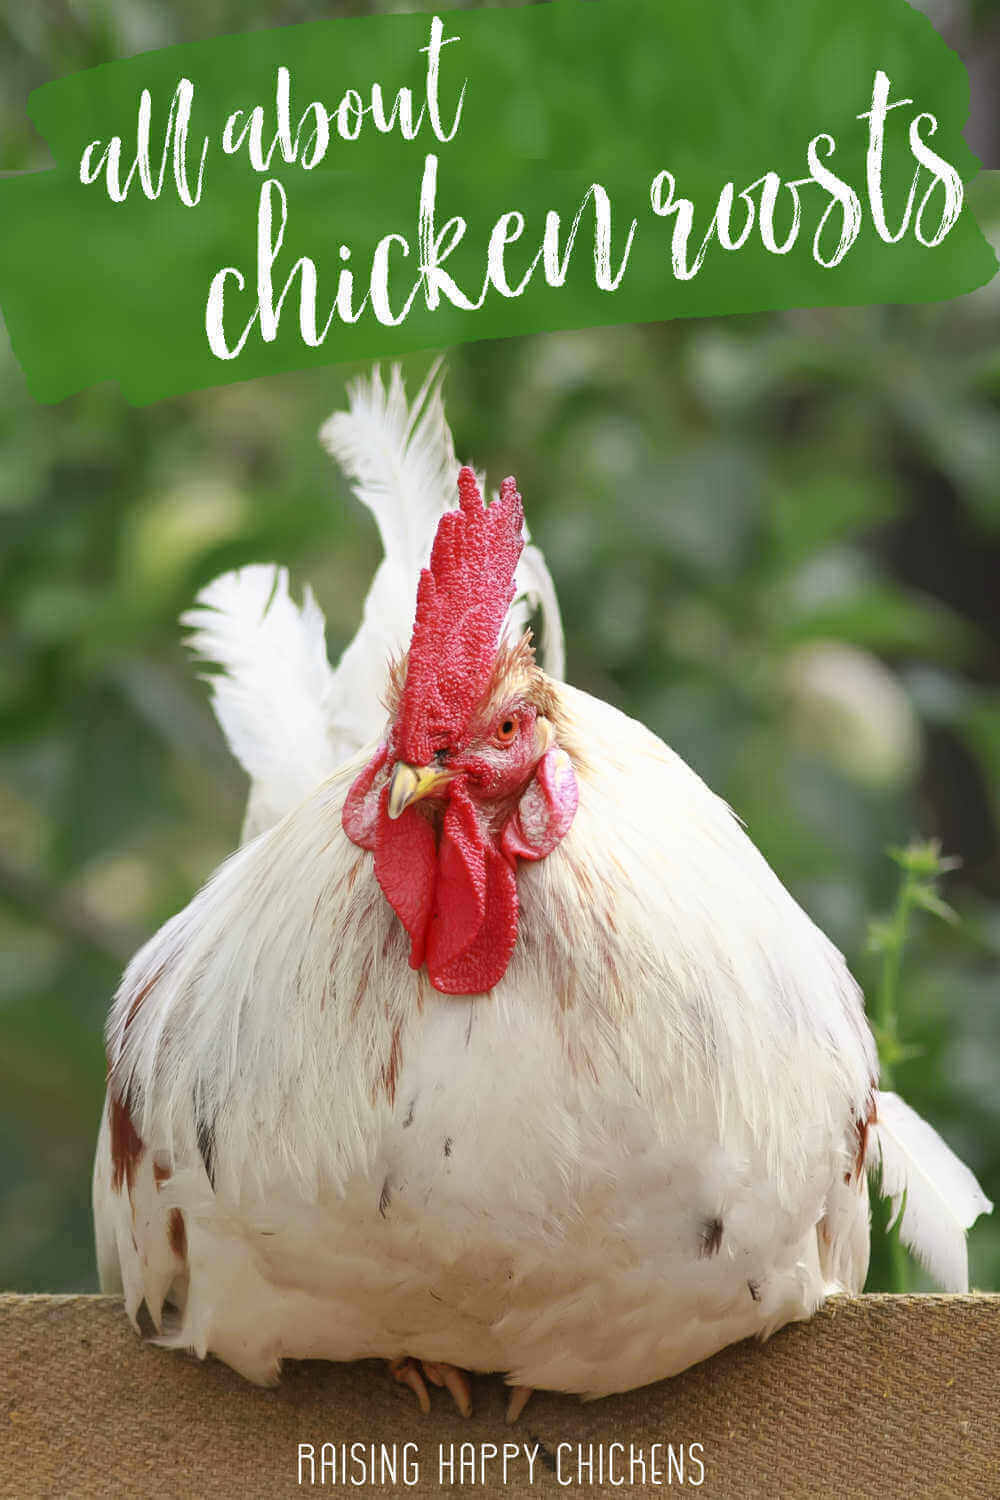 https://www.raising-happy-chickens.com/images/chicken-roost.jpg